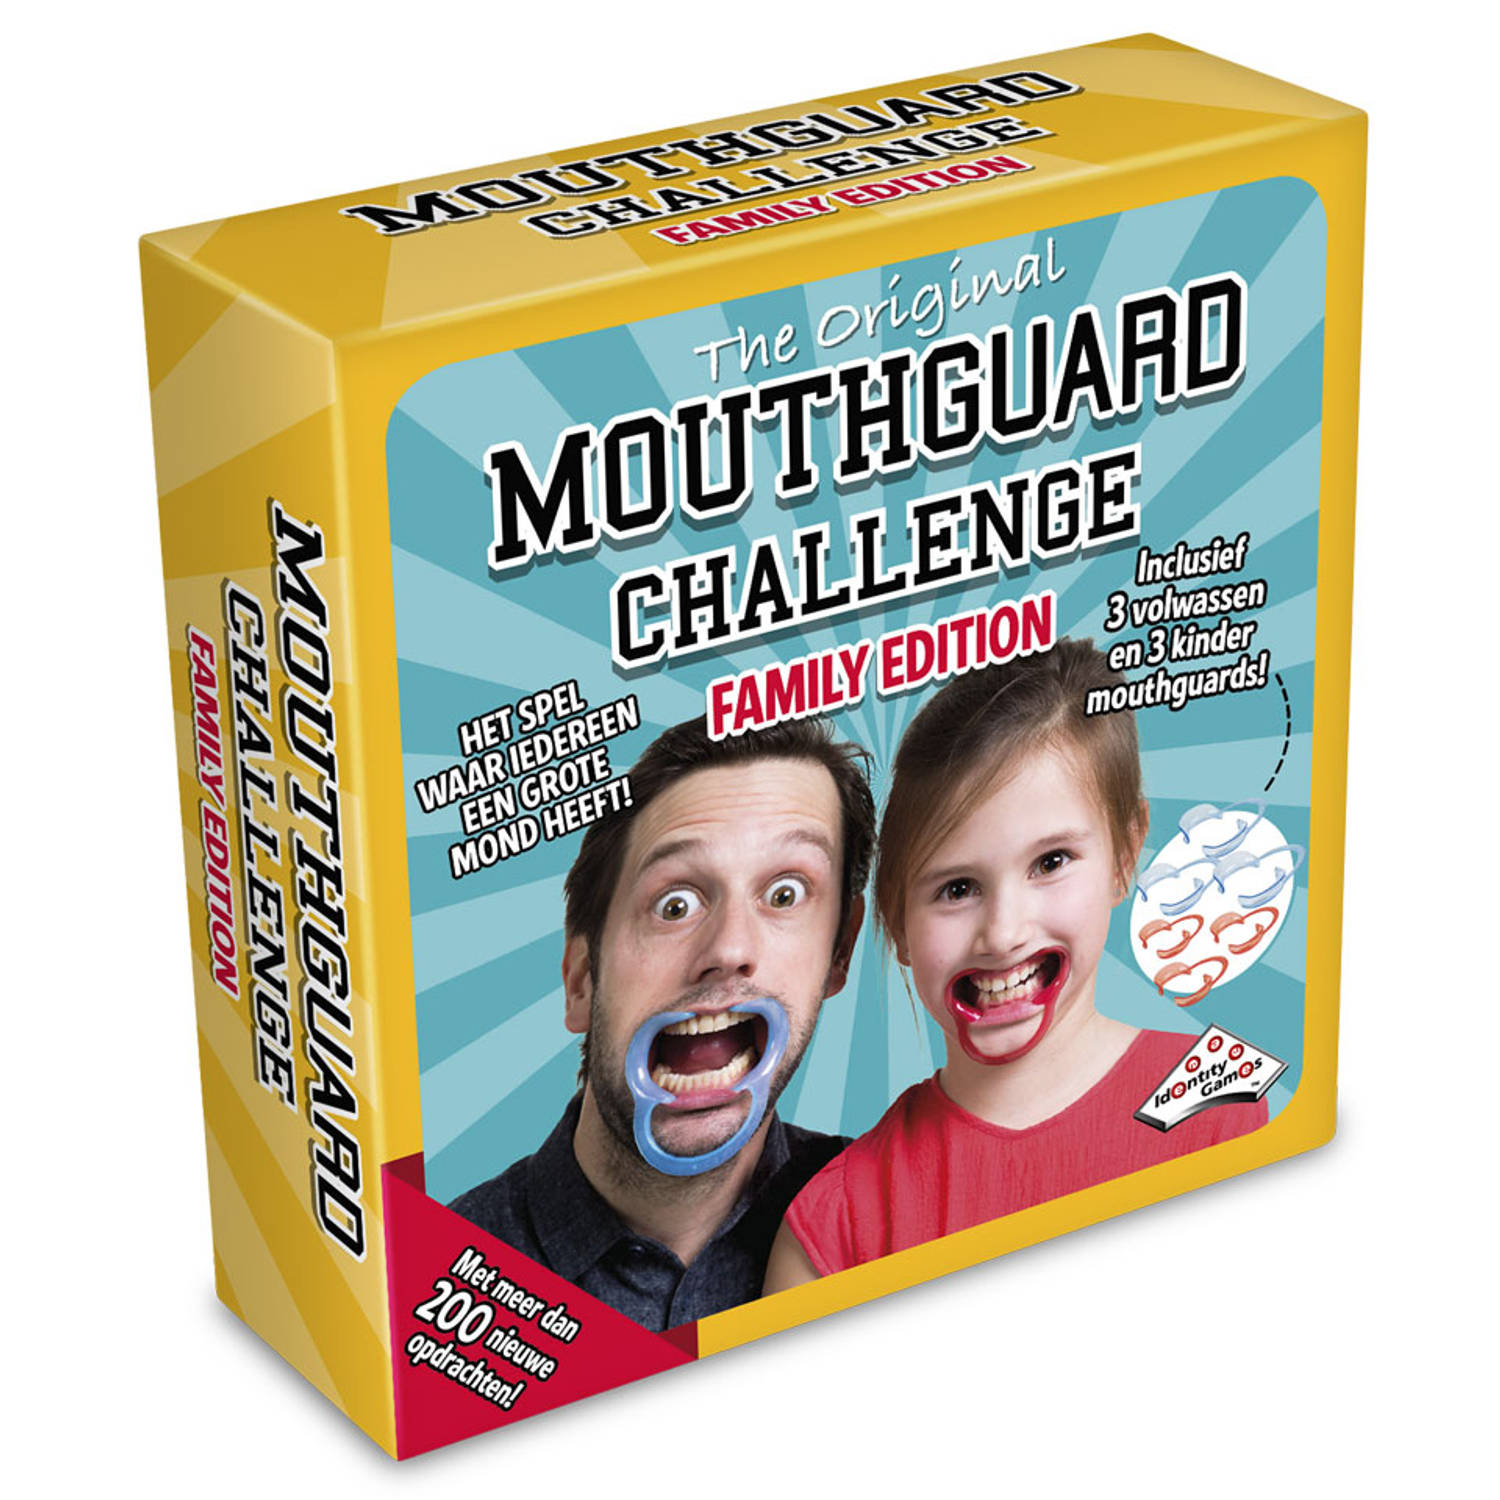 Mouthguard Challenge spel familie editie